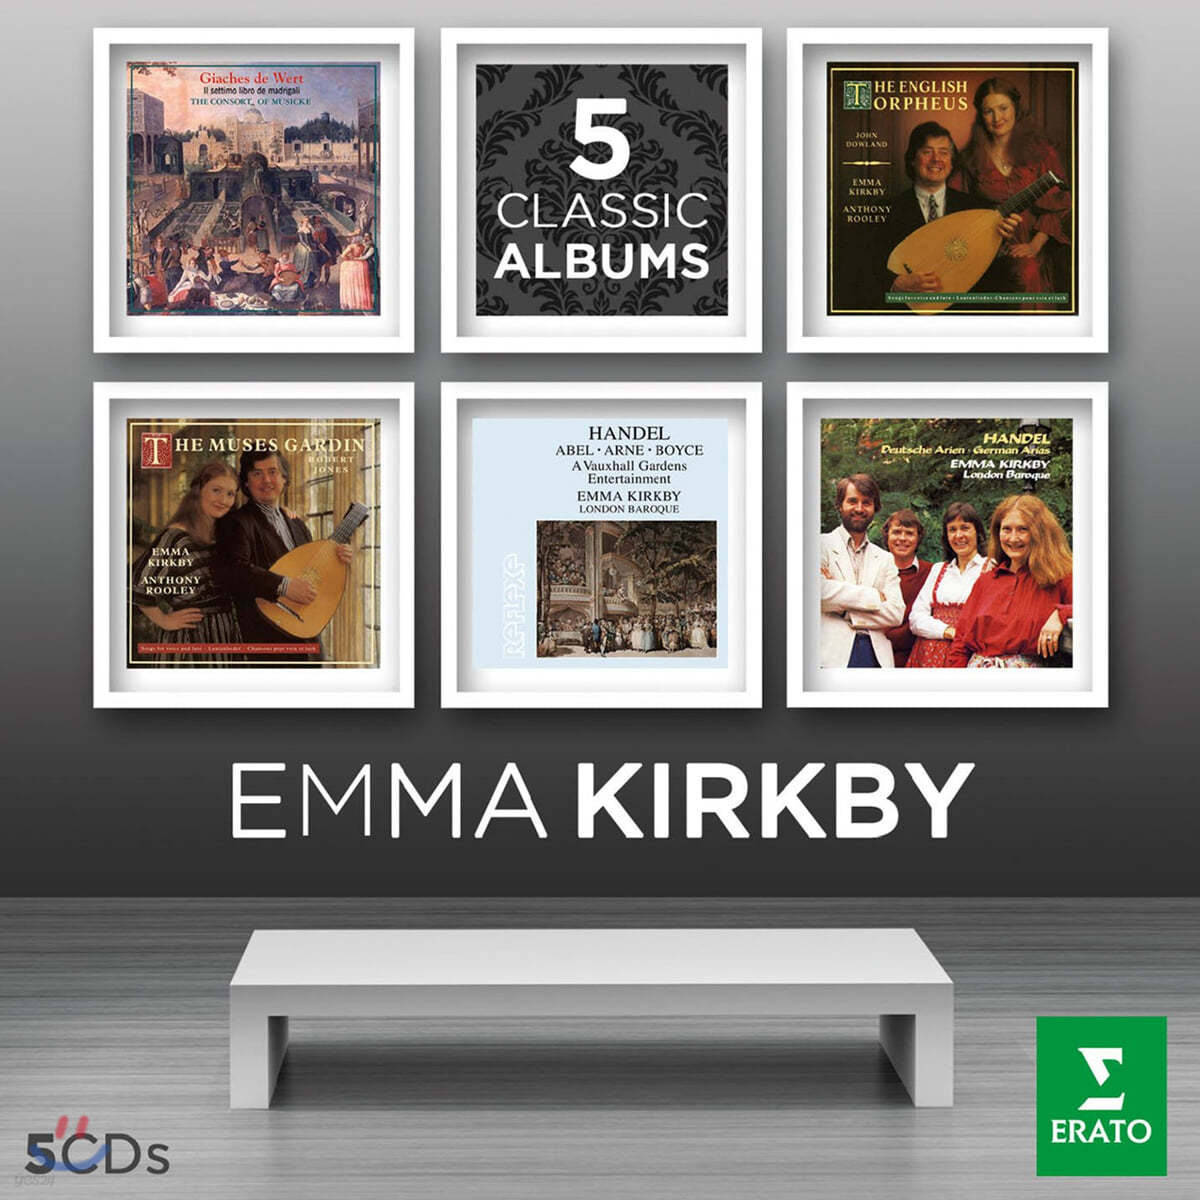 Emma Kirkby 엠마 커크비 Virgin 레이블 녹음 모음집 (5 Classic Albums) [5CD 한정반]